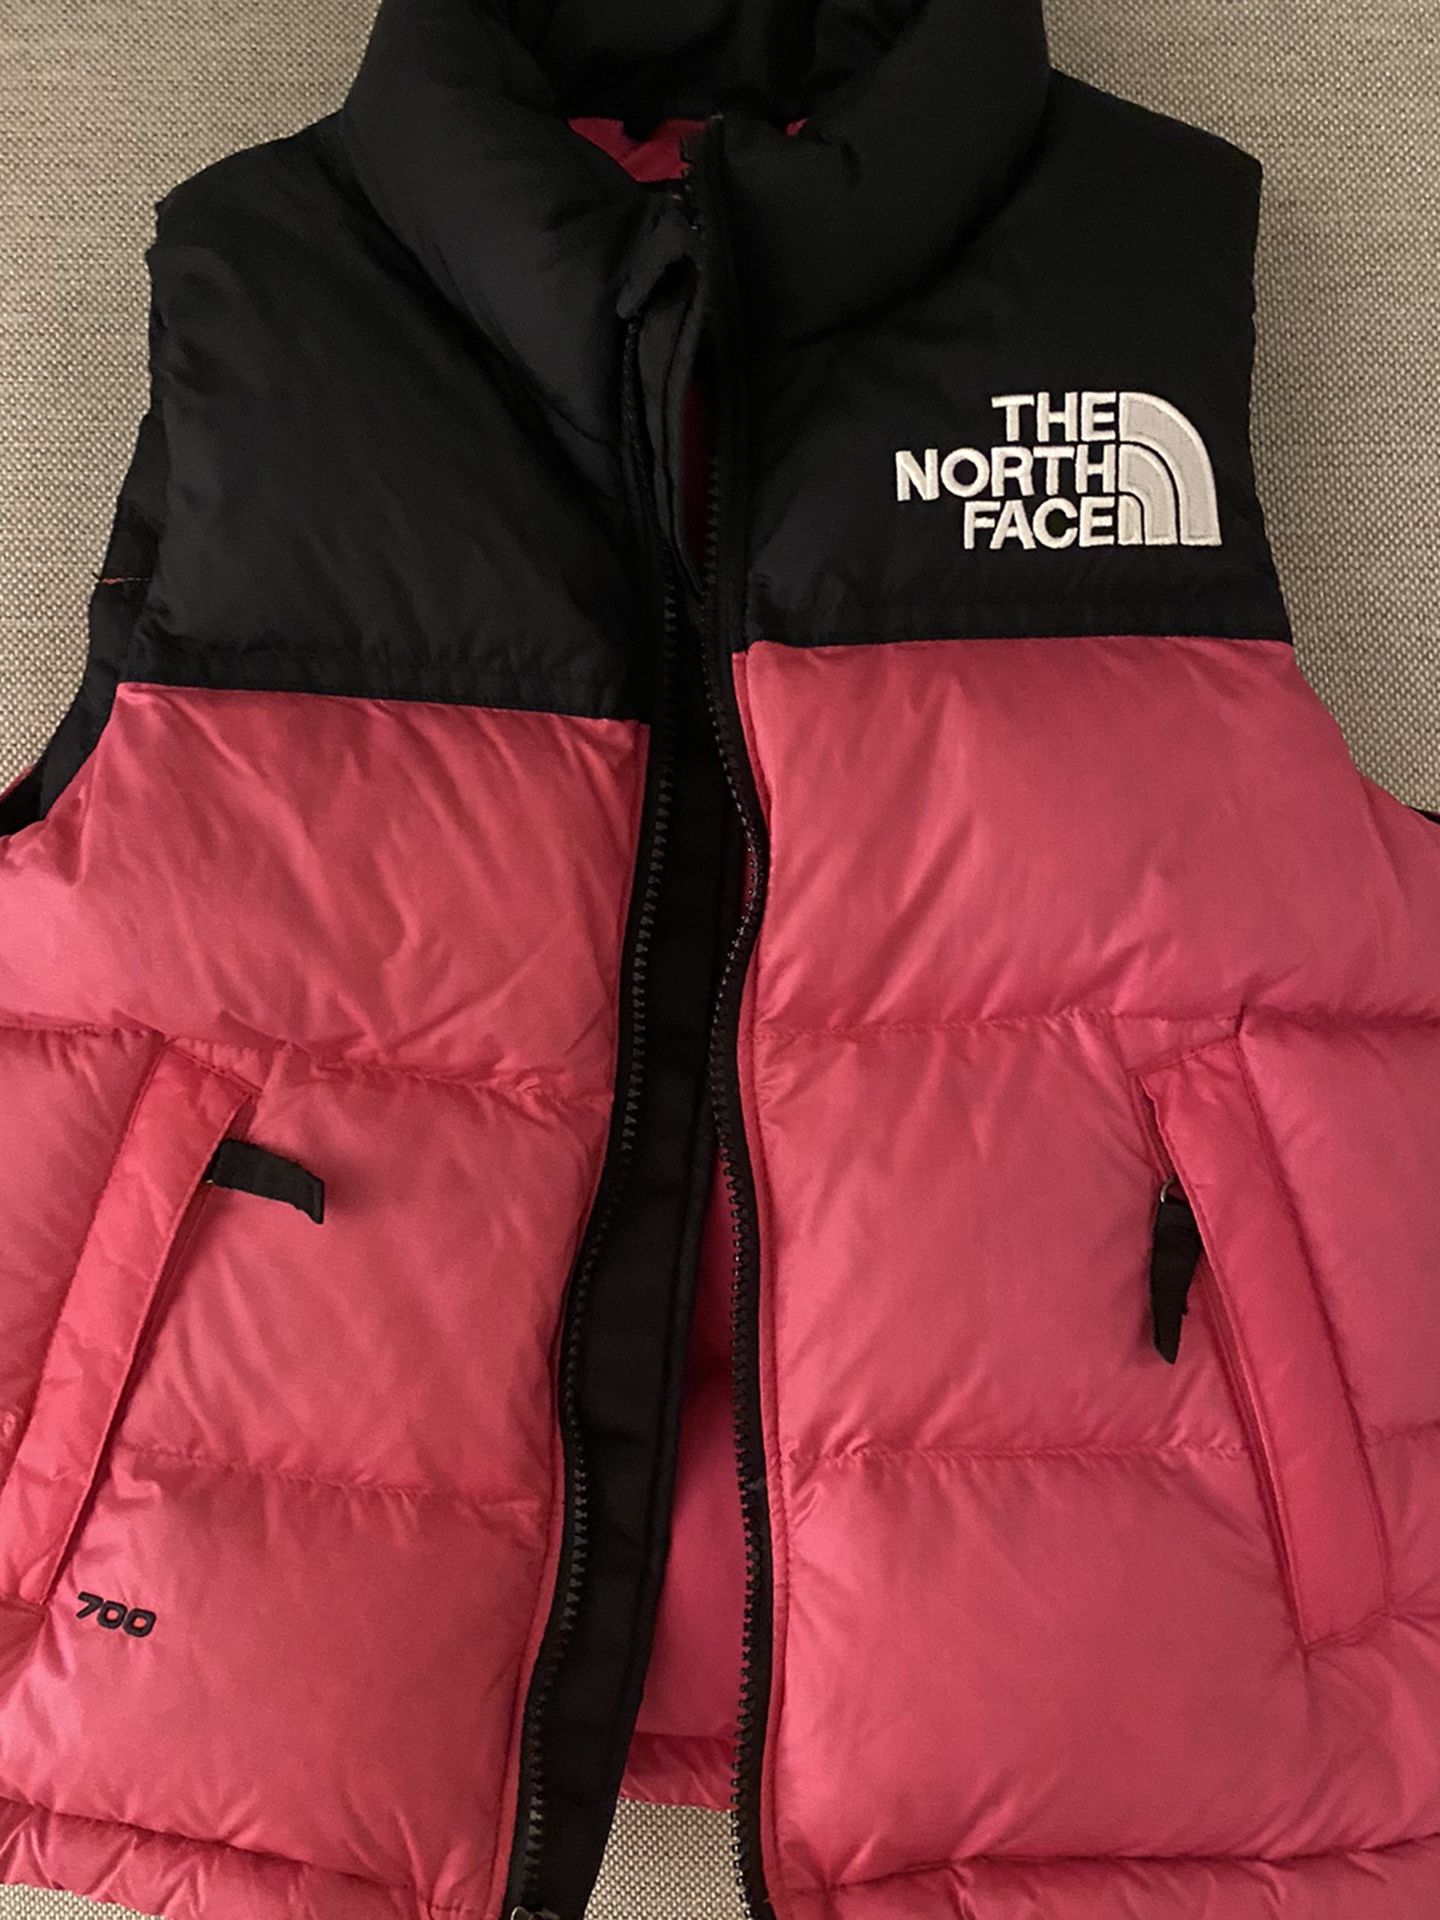 The North Face - Vest Kids - Girl